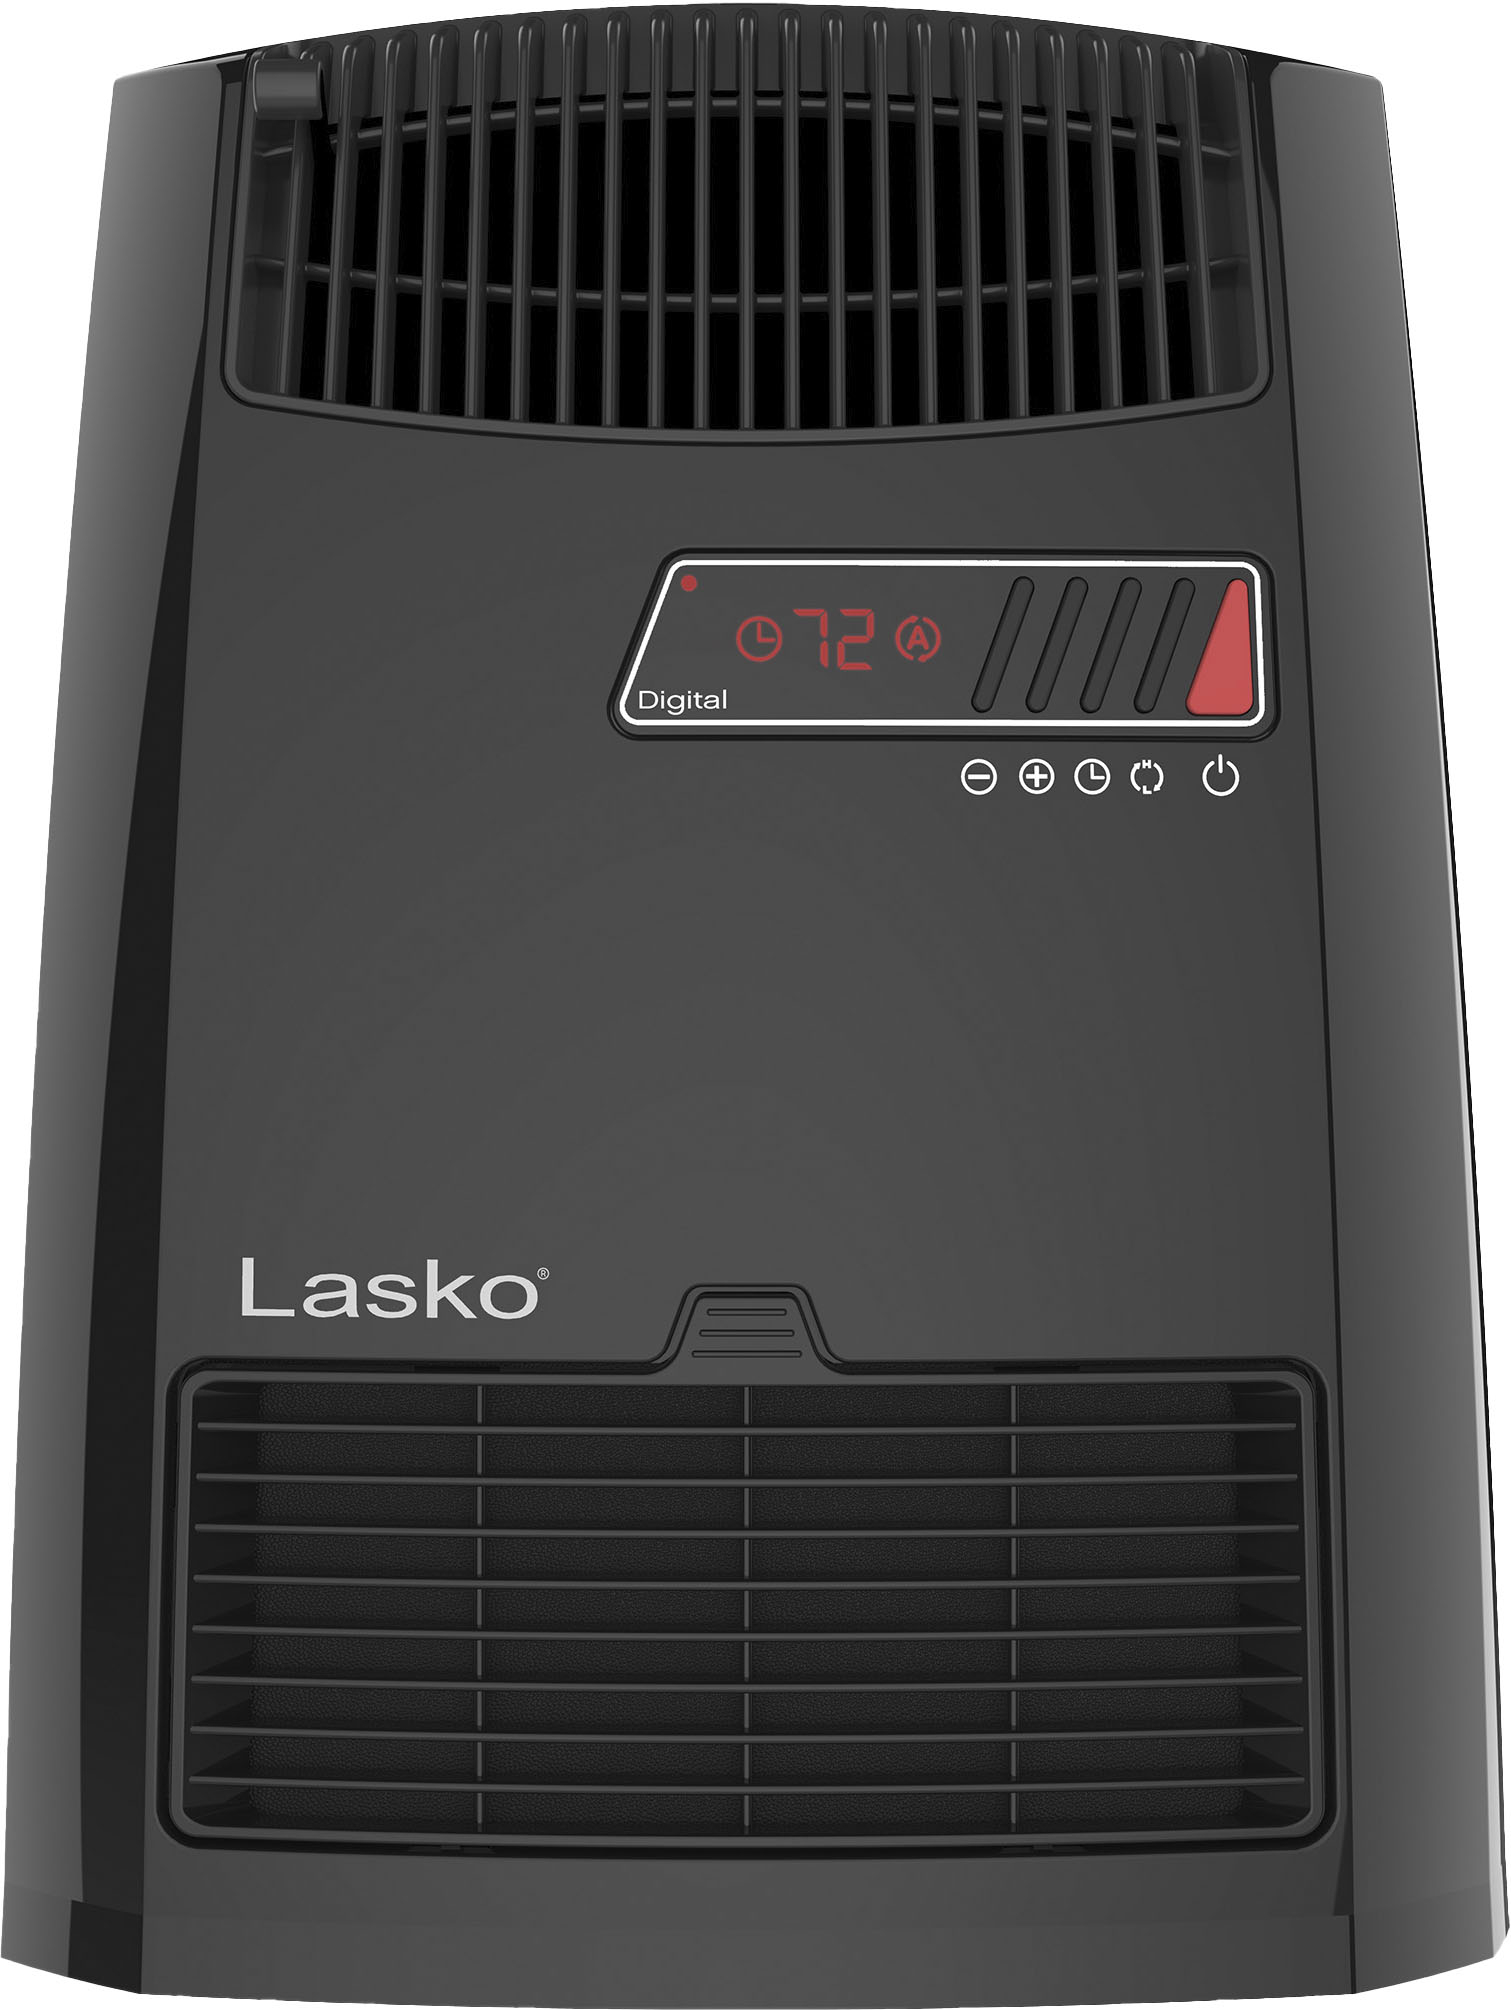 Lasko Portable Digital Ceramic Space Heater with Warm Air Motion Technology  Black CC13700 - Best Buy